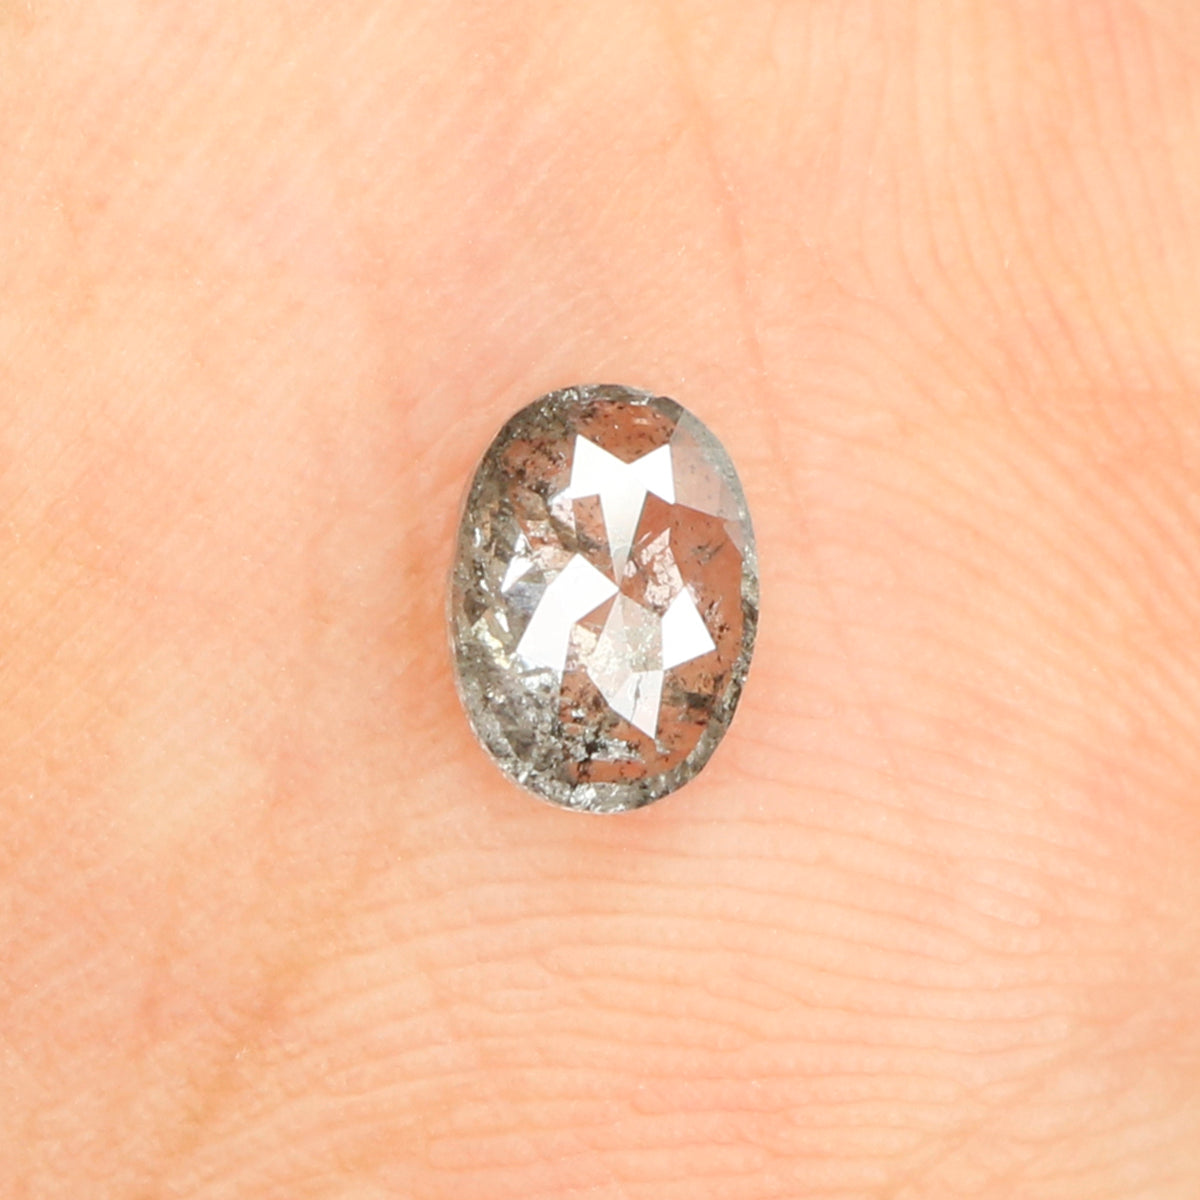 0.36 Ct Natural Loose Diamond, Oval Diamond, Black Diamond, Grey Diamond, Salt and Pepper Diamond, Antique Diamond, Real Diamond L424